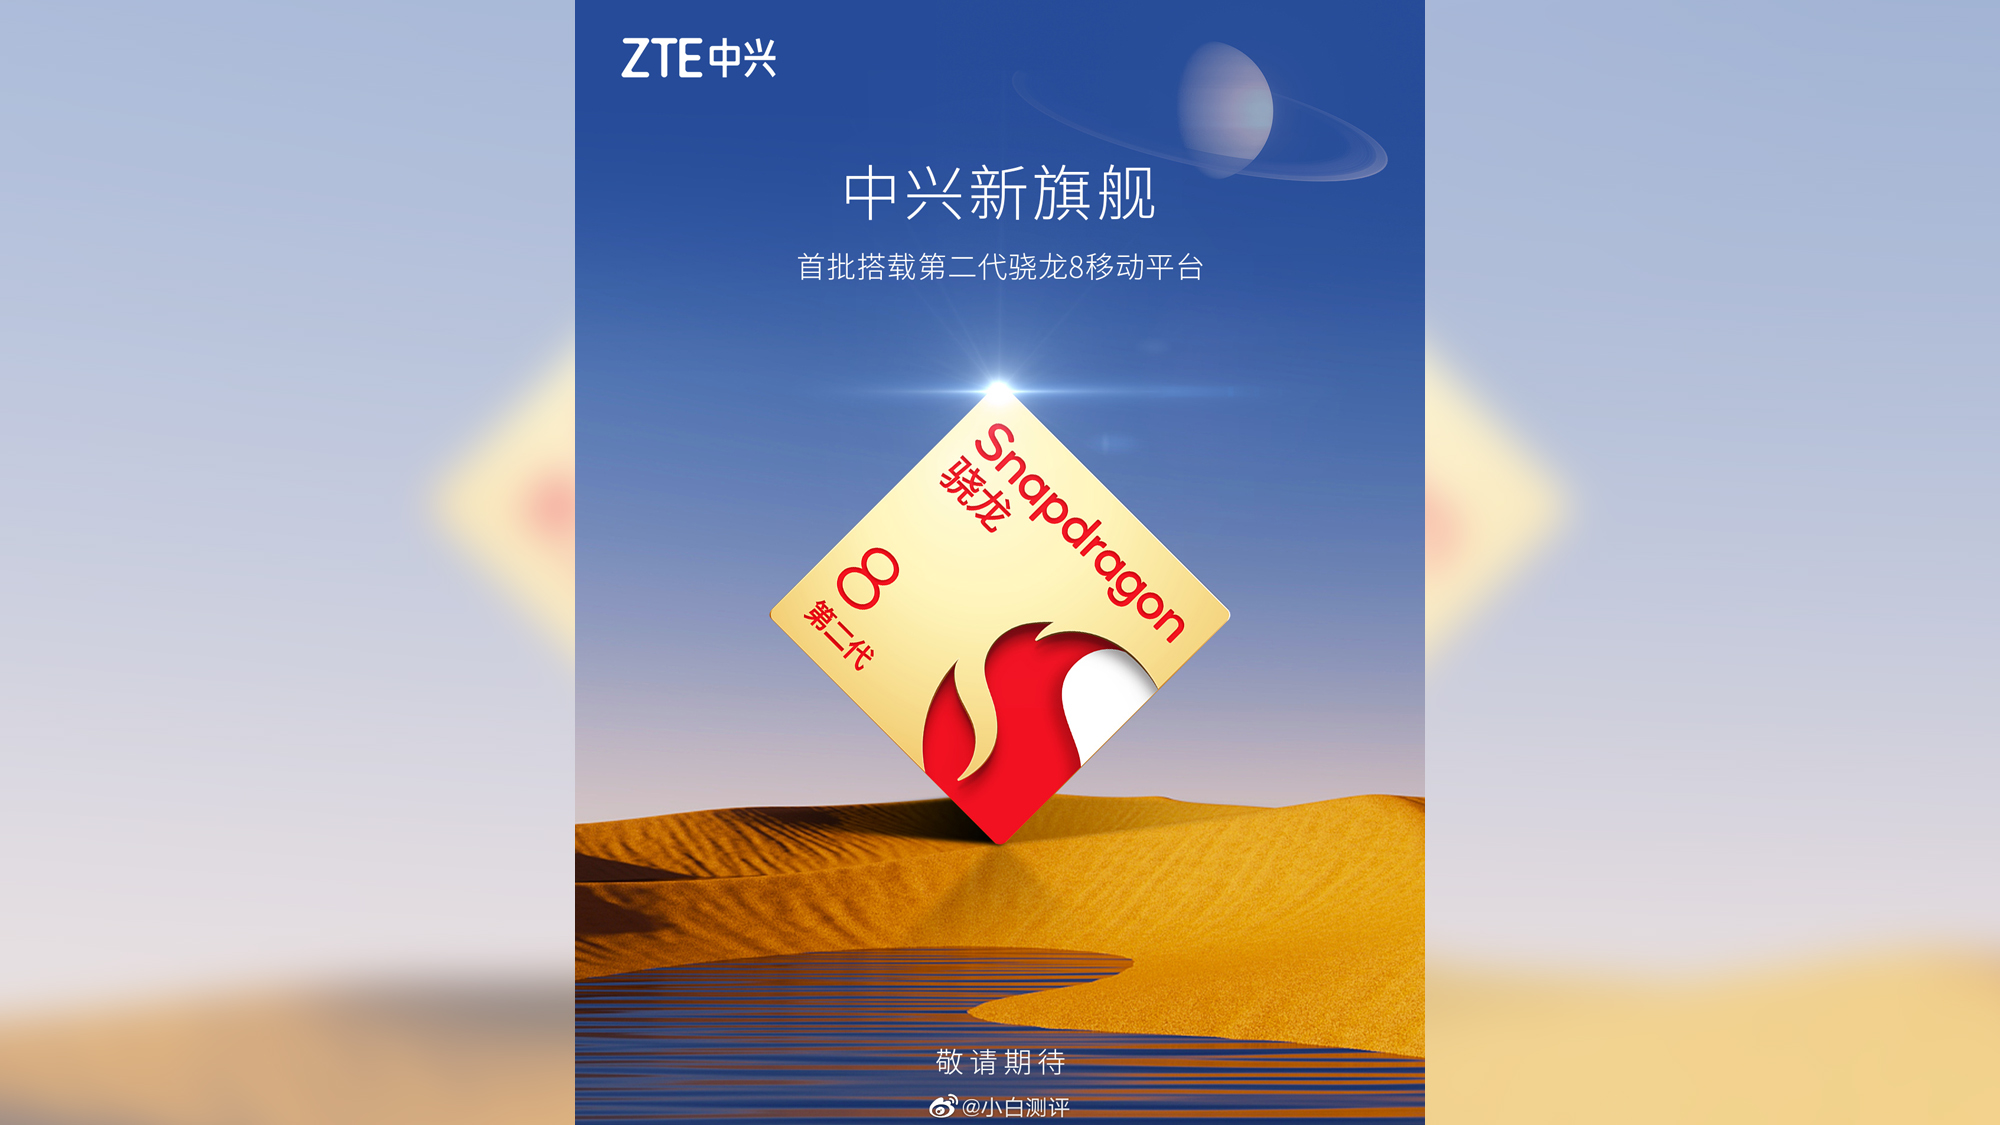 ZTE Snapdragon 8 Gen 2 teaser image from Weibo